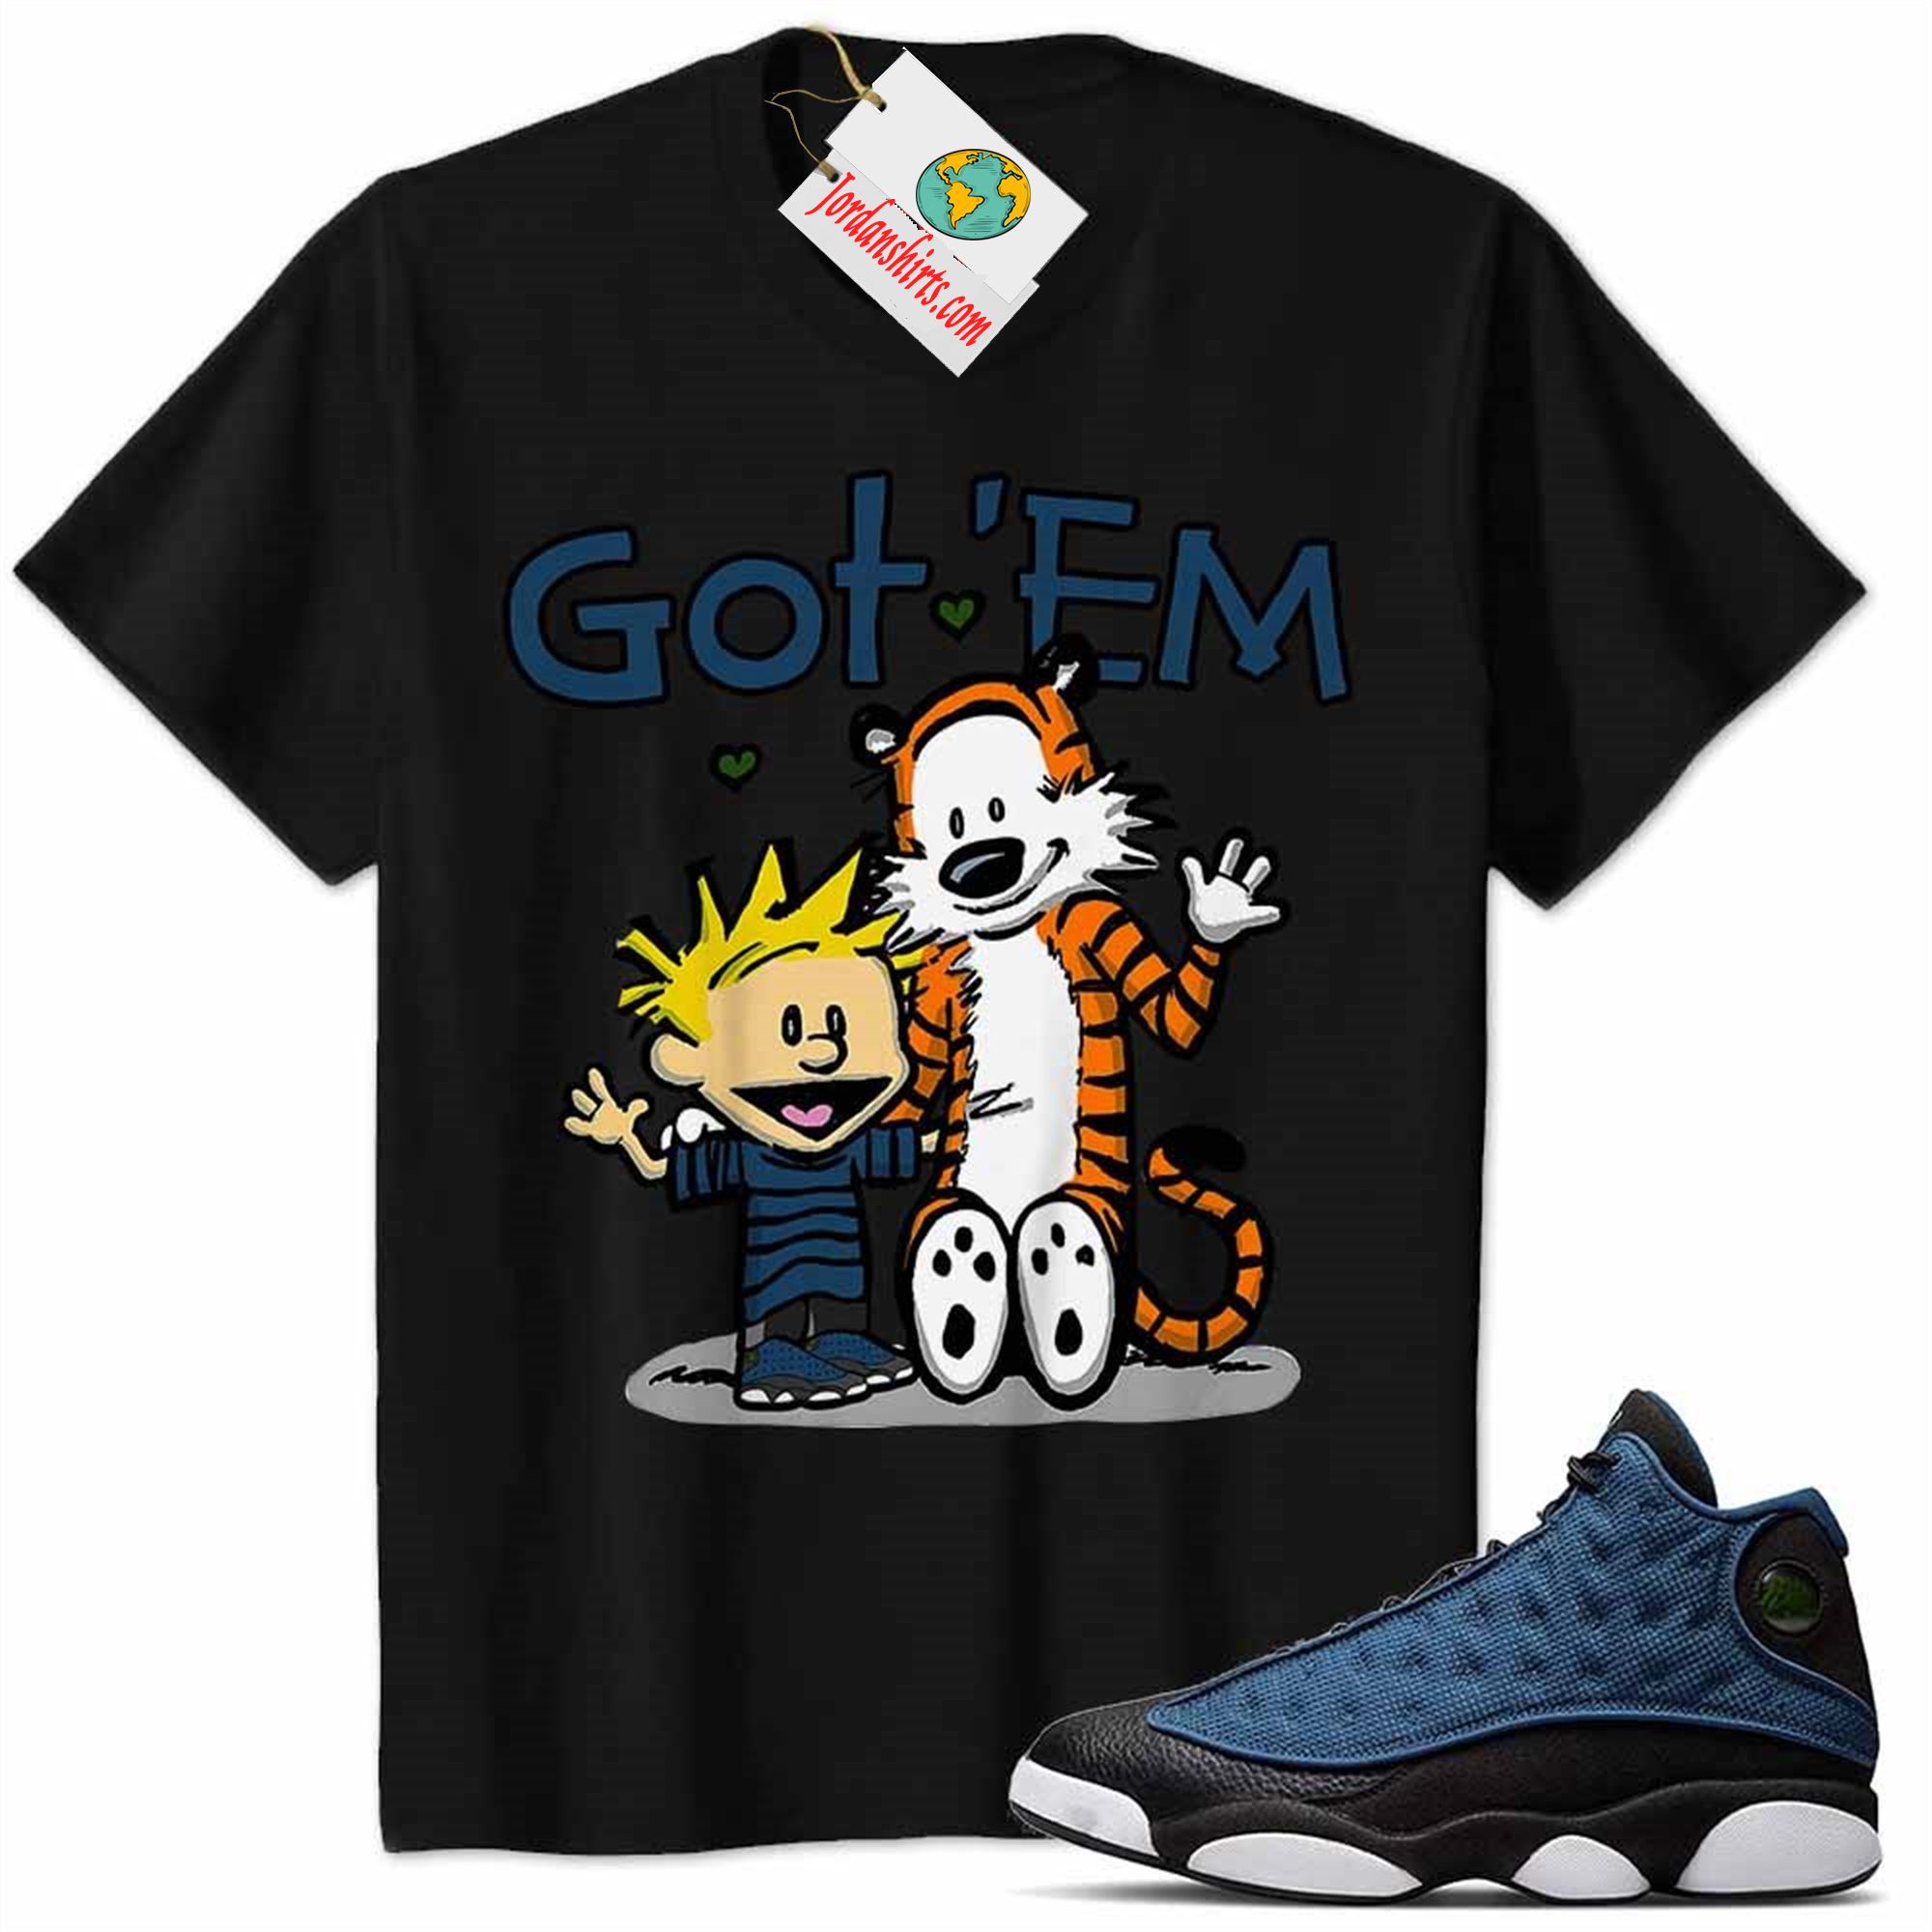 Jordan 13 Shirt, Jordan 13 Brave Blue Shirt Shirt Calvin And Hobbes Got Em Black Size Up To 5xl